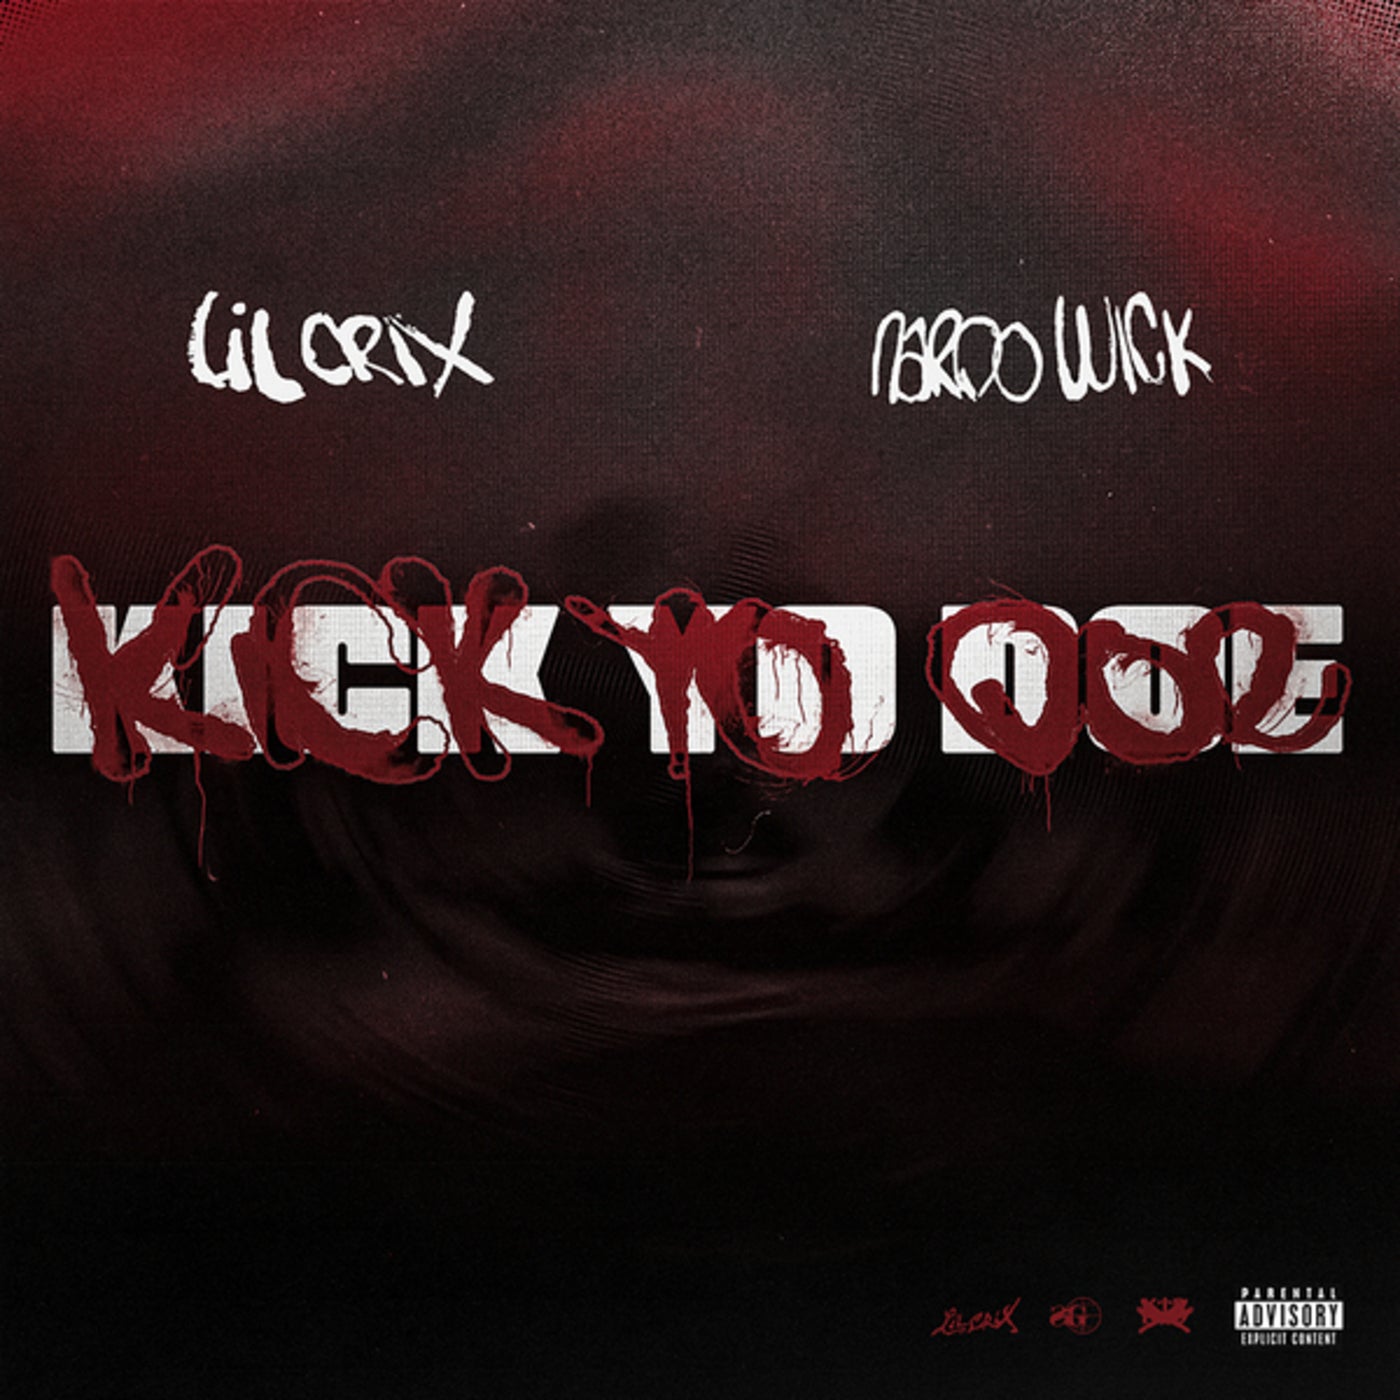 Kick Yo Doe by Nardo Wick and Lil Crix on Beatsource